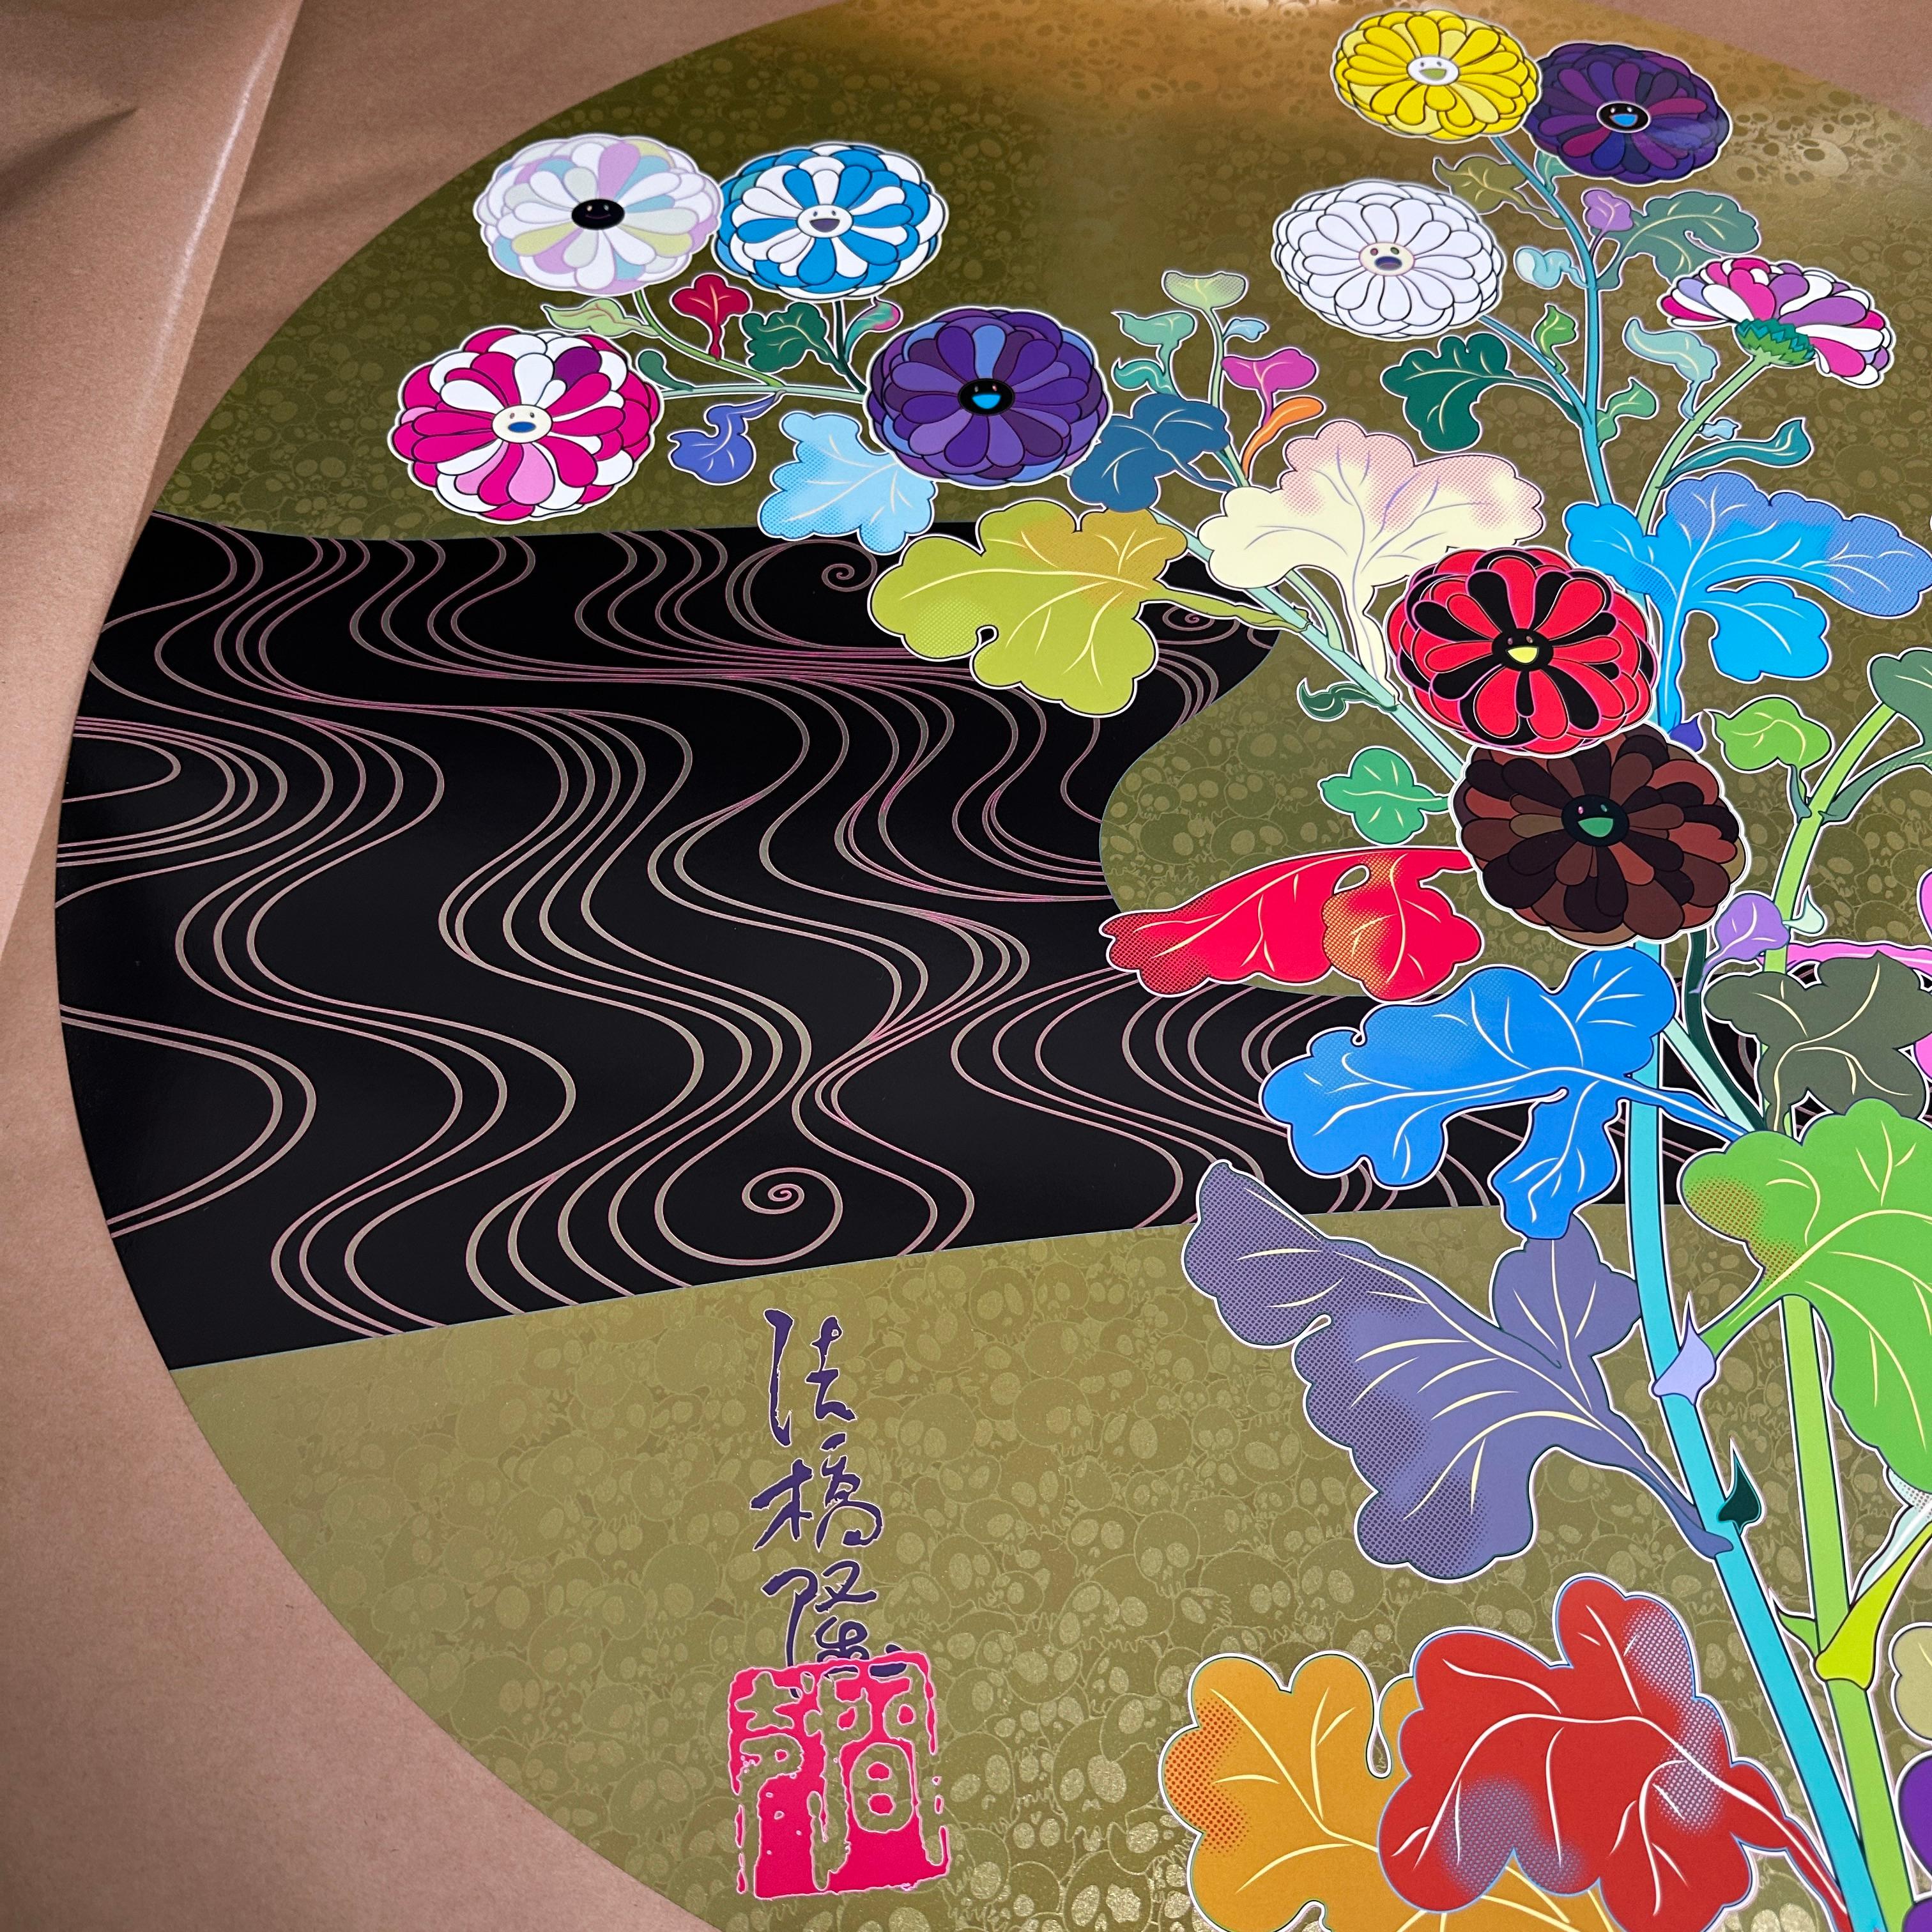 Korin: The Golden River (Japan, Takashi Murakami, Tokyo, Flowers) 2